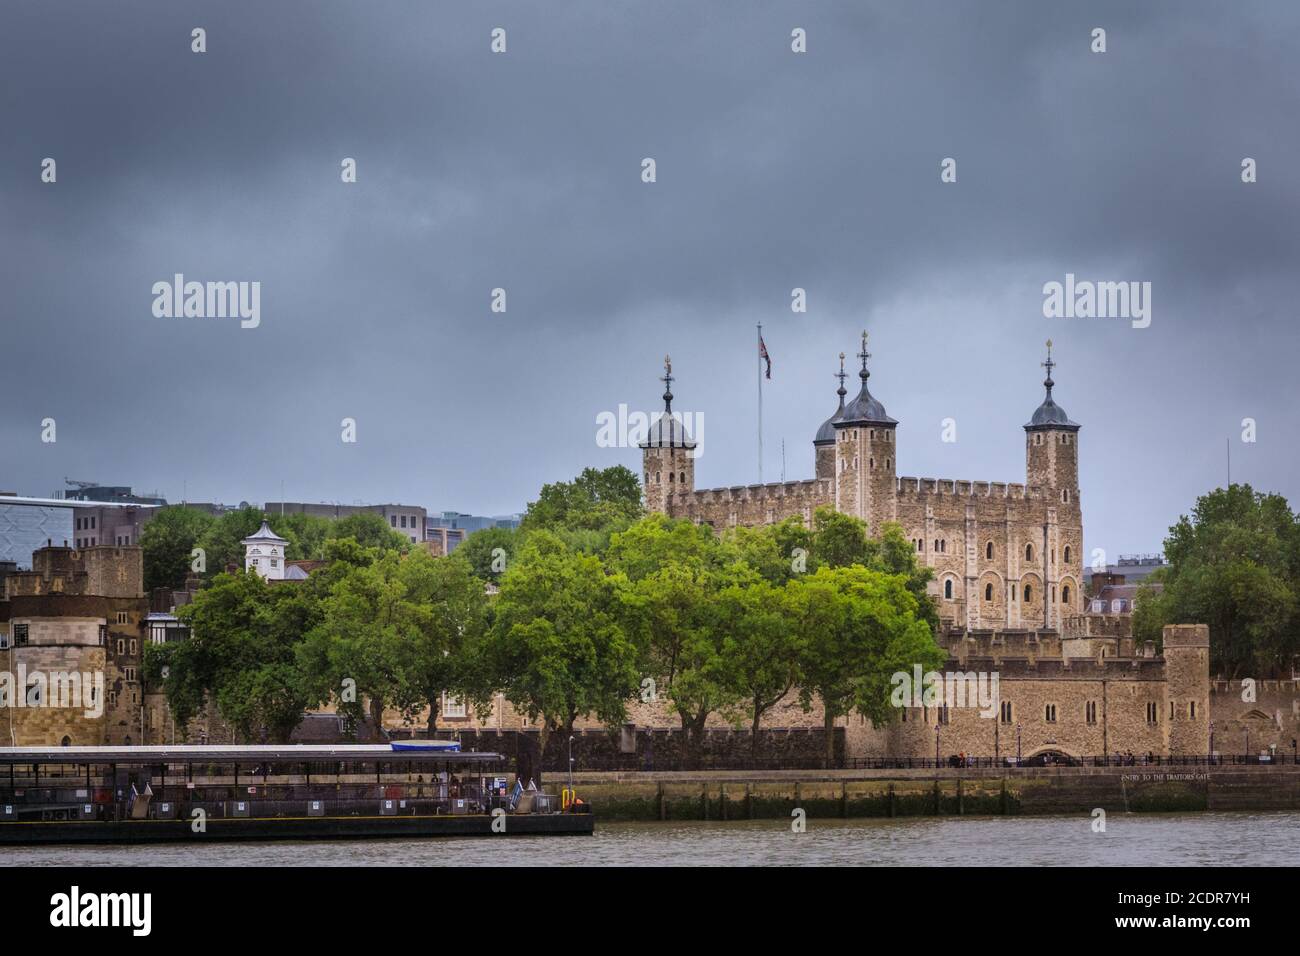 Tower of London von der Themse, her Majesty's Royal Palace und Fortress of the Tower of London, historisches Schloss an der Themse, London, Großbritannien Stockfoto